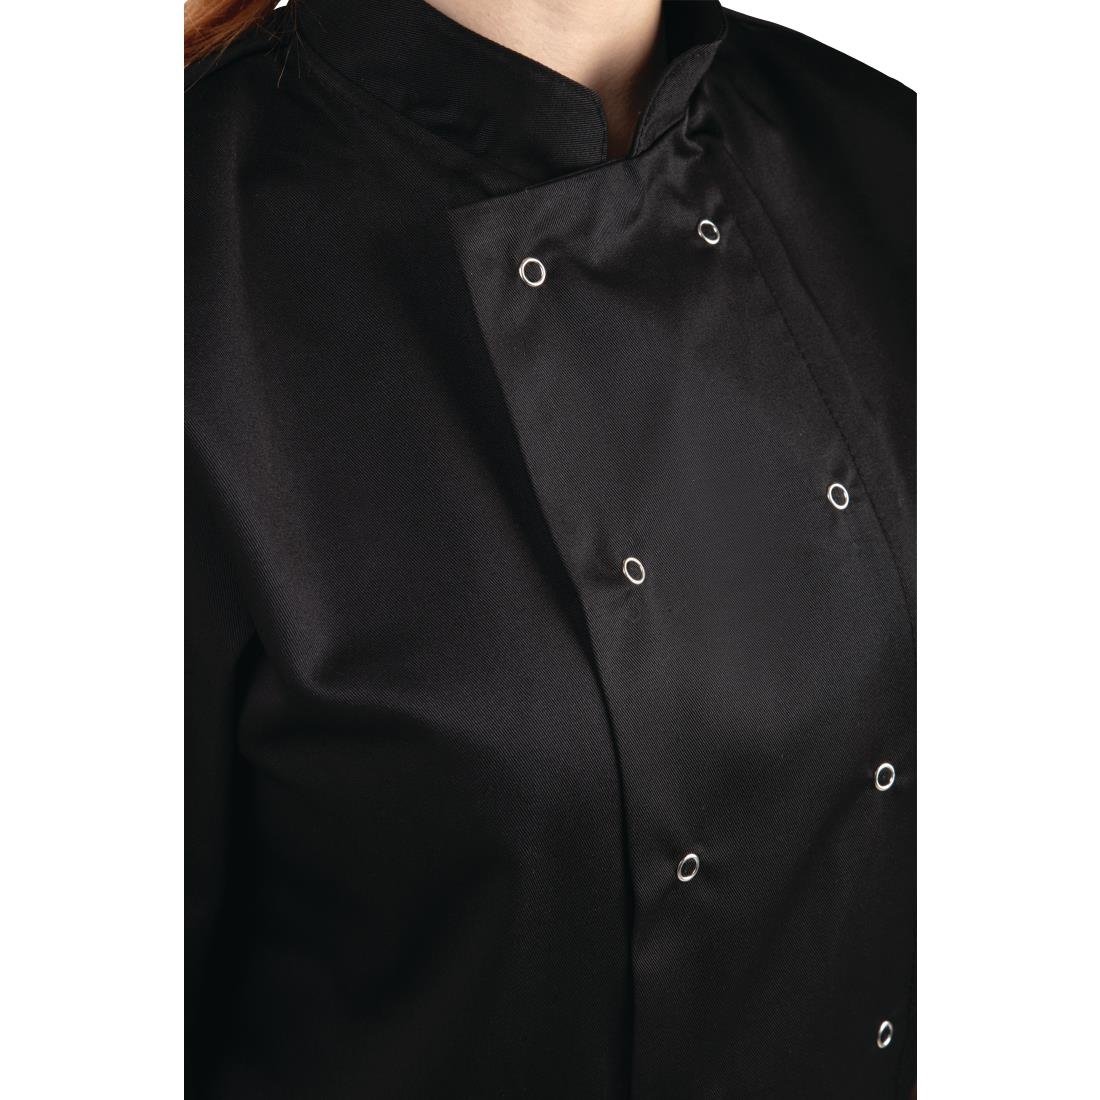 A439-5XL Whites Vegas Unisex Chefs Jacket Short Sleeve Black 5XL JD Catering Equipment Solutions Ltd